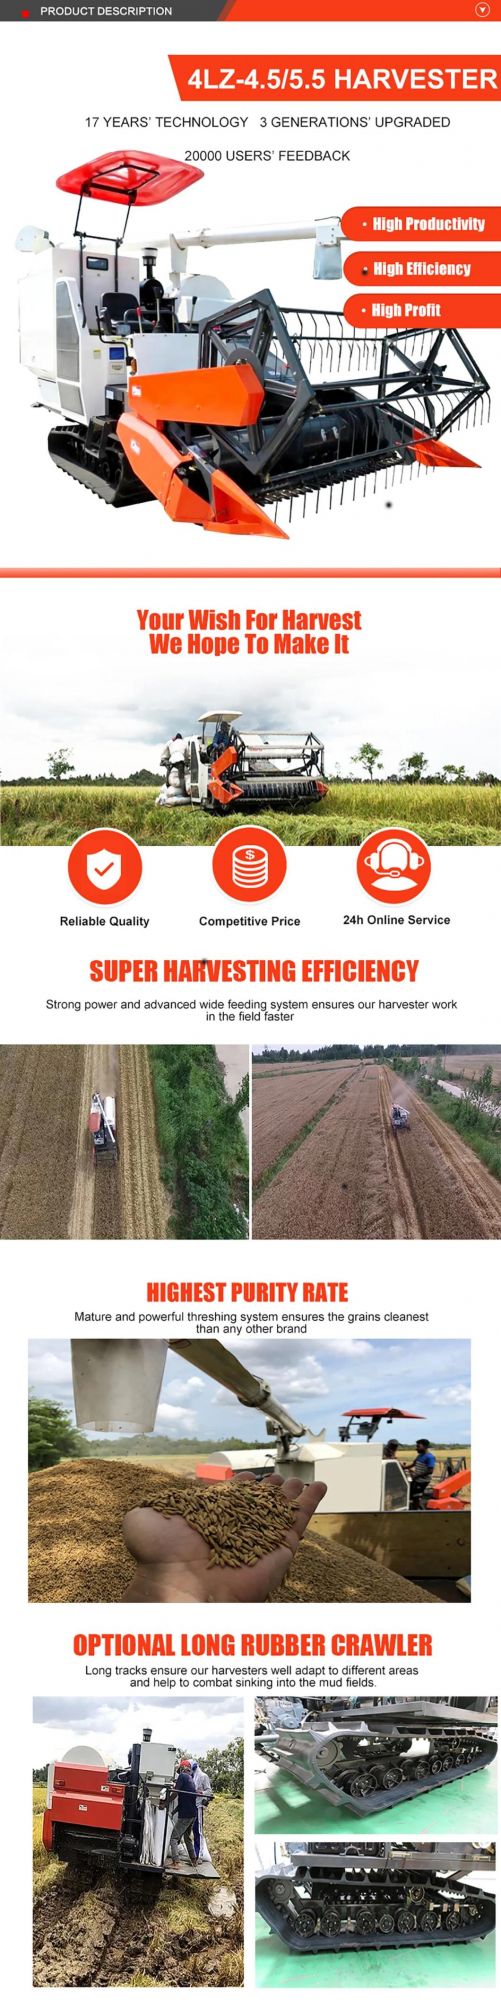 Kubota Similar Paddy Rice Combine Harvester for Sale in Indonesia